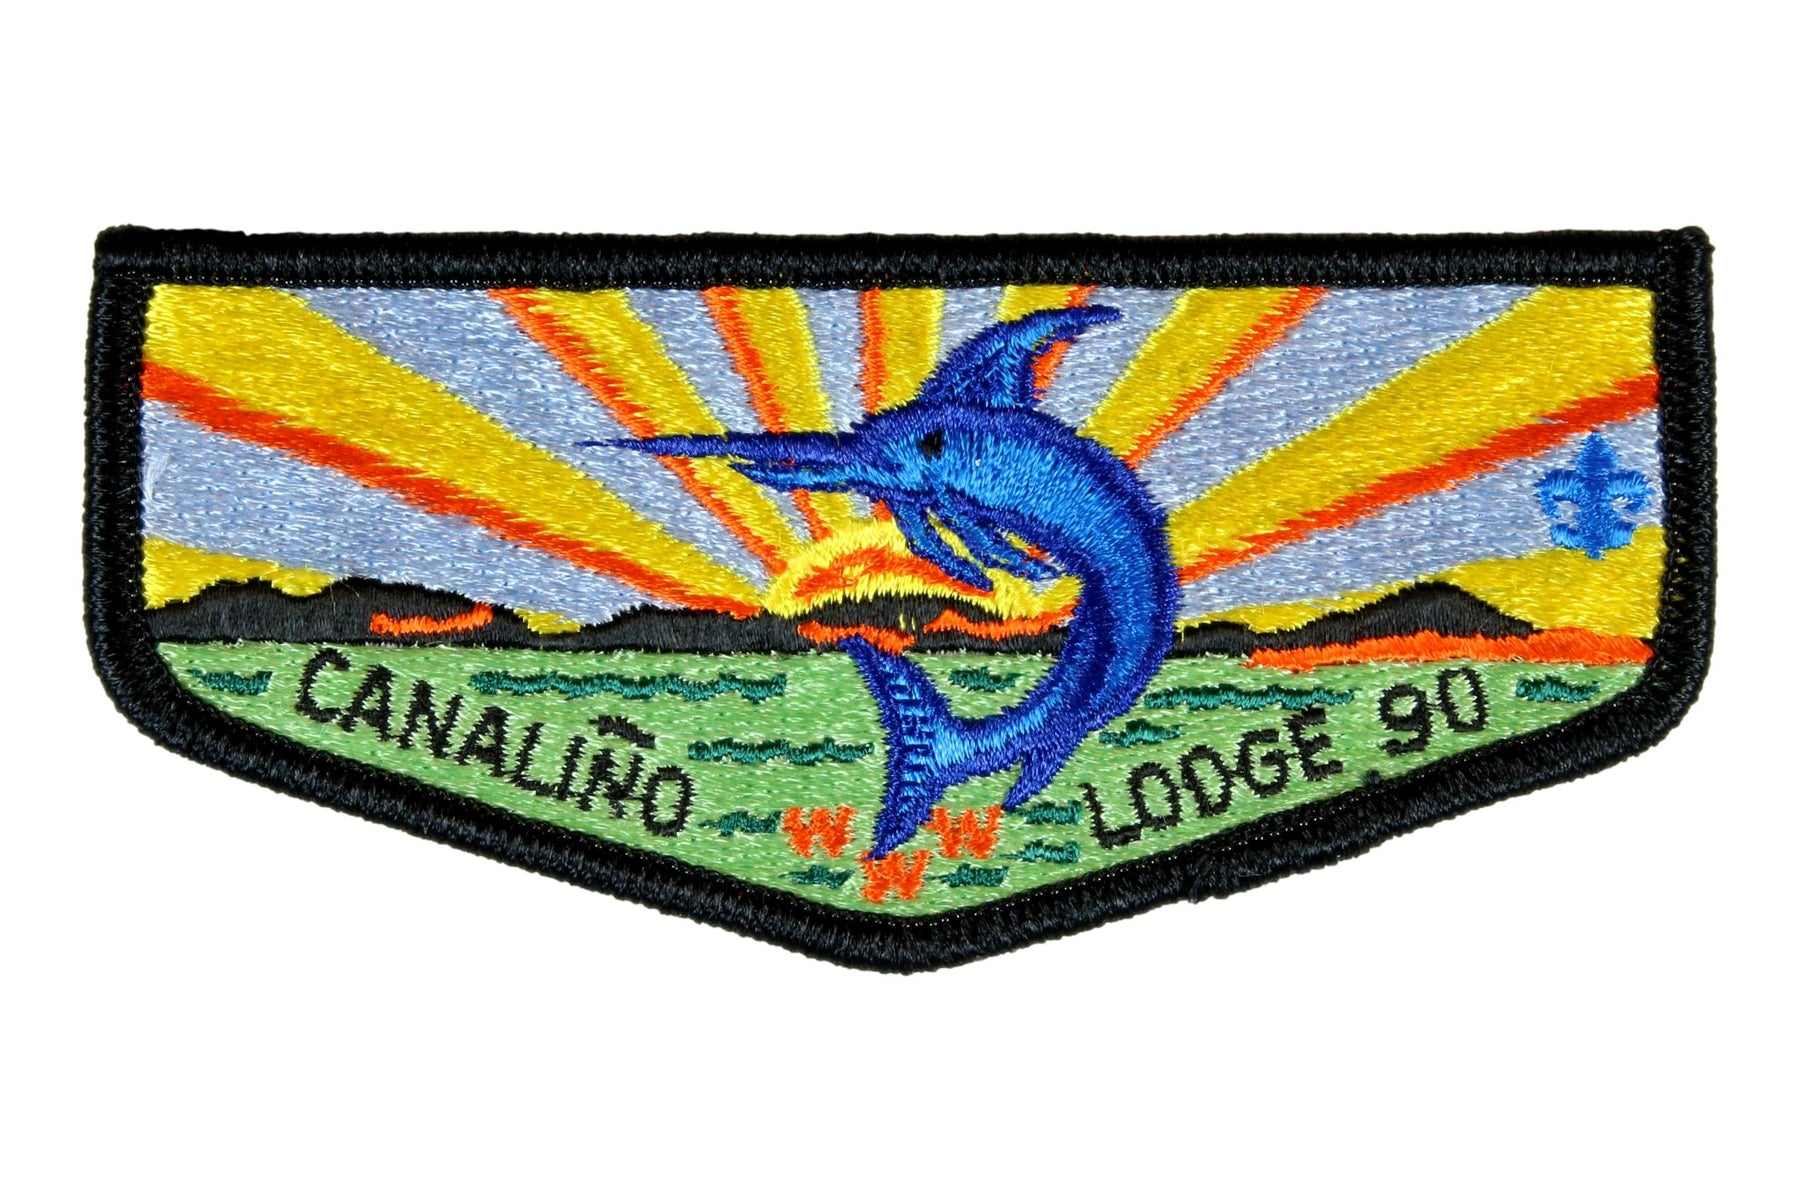 Lodge 90 Canalino Flap S-4a